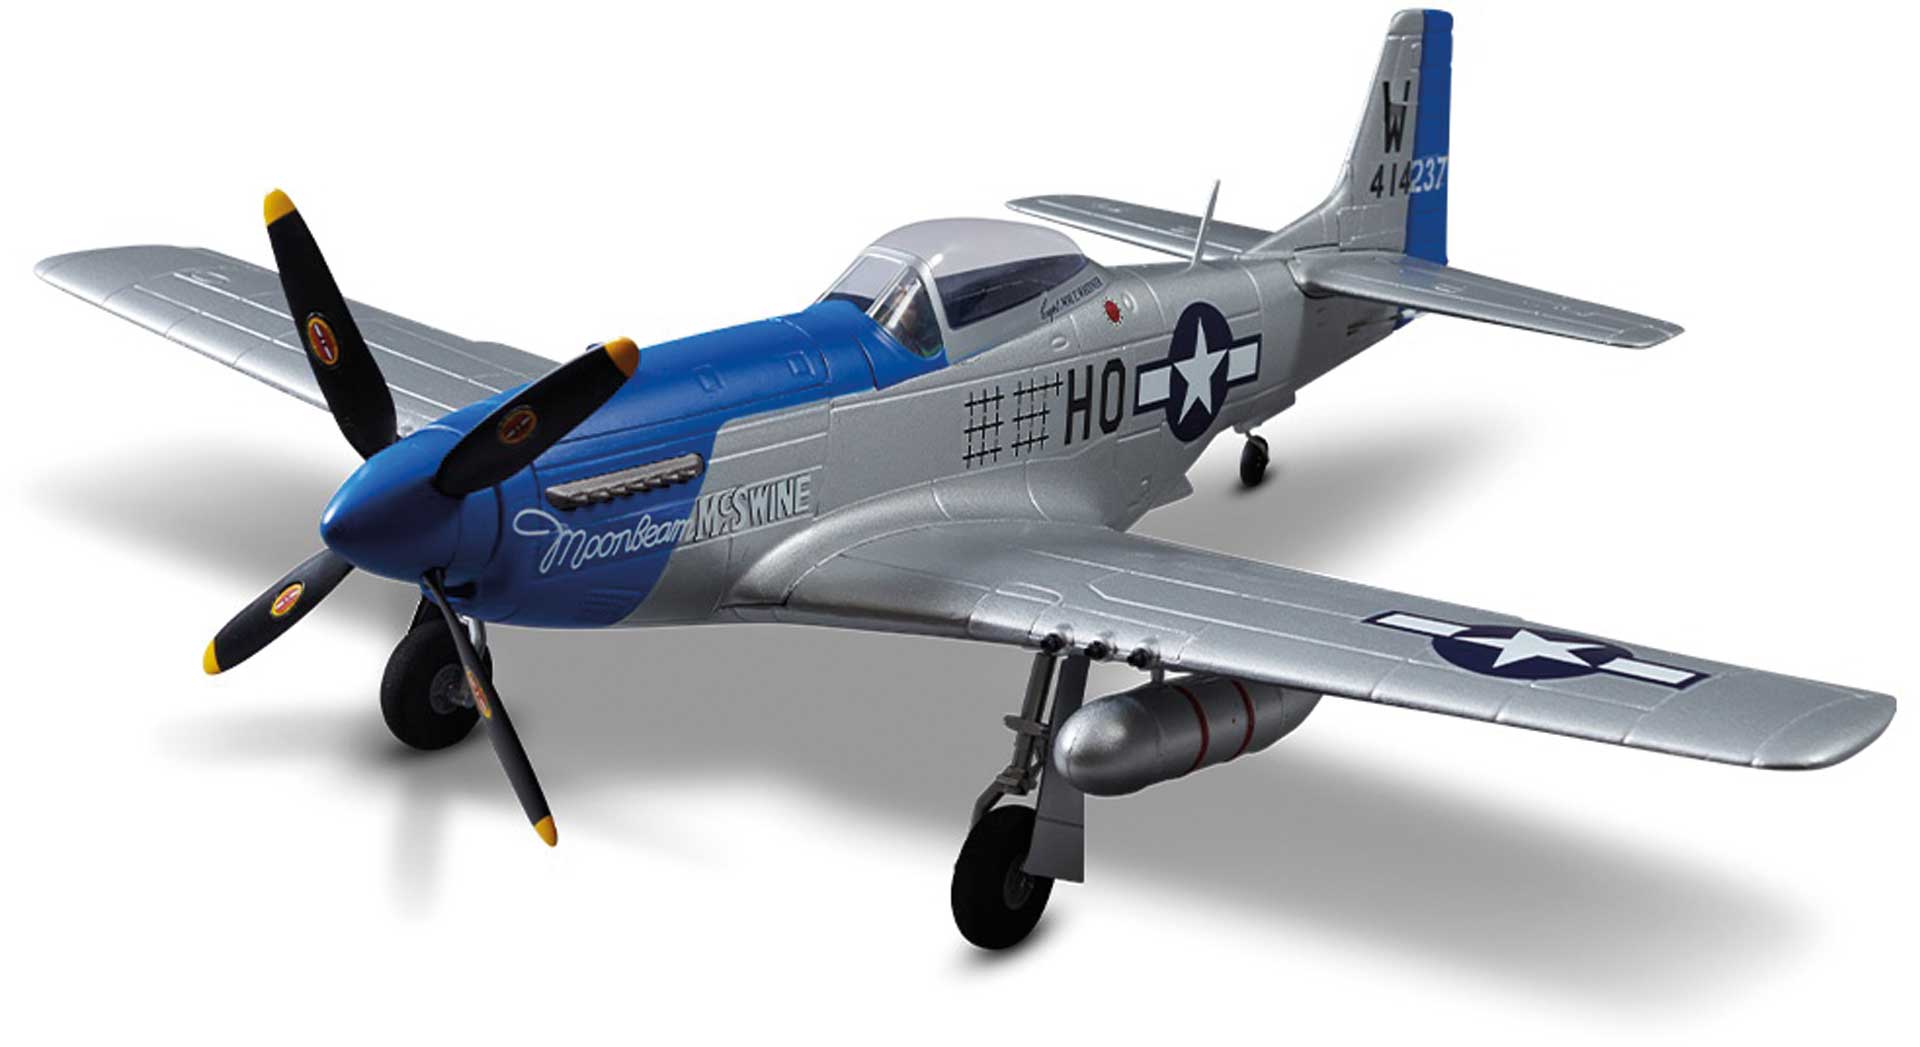 DERBEE P-51D Mustang Warbird PNP blue - 75cm